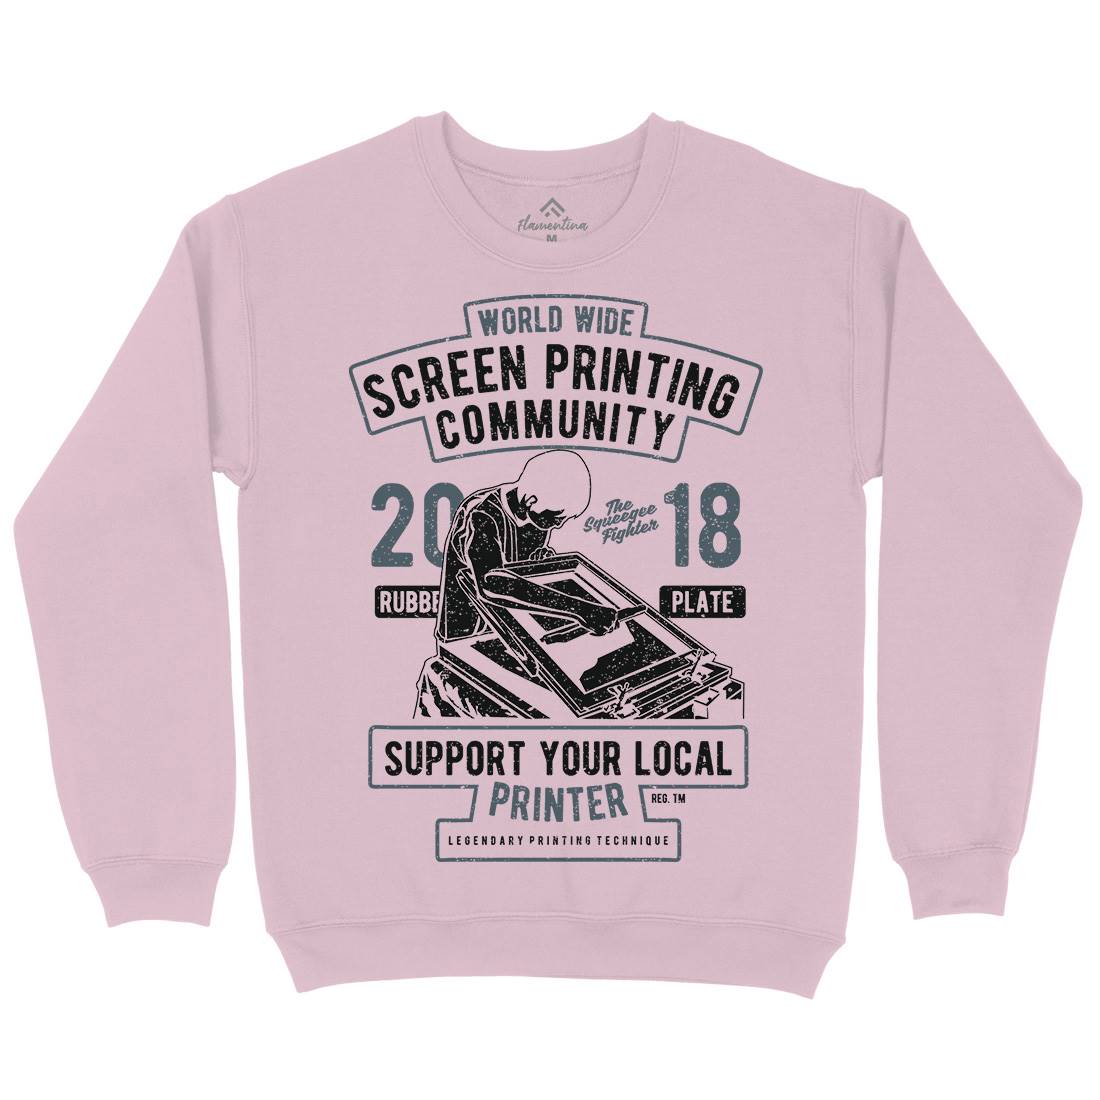 Screen Printing Community Kids Crew Neck Sweatshirt Work A751